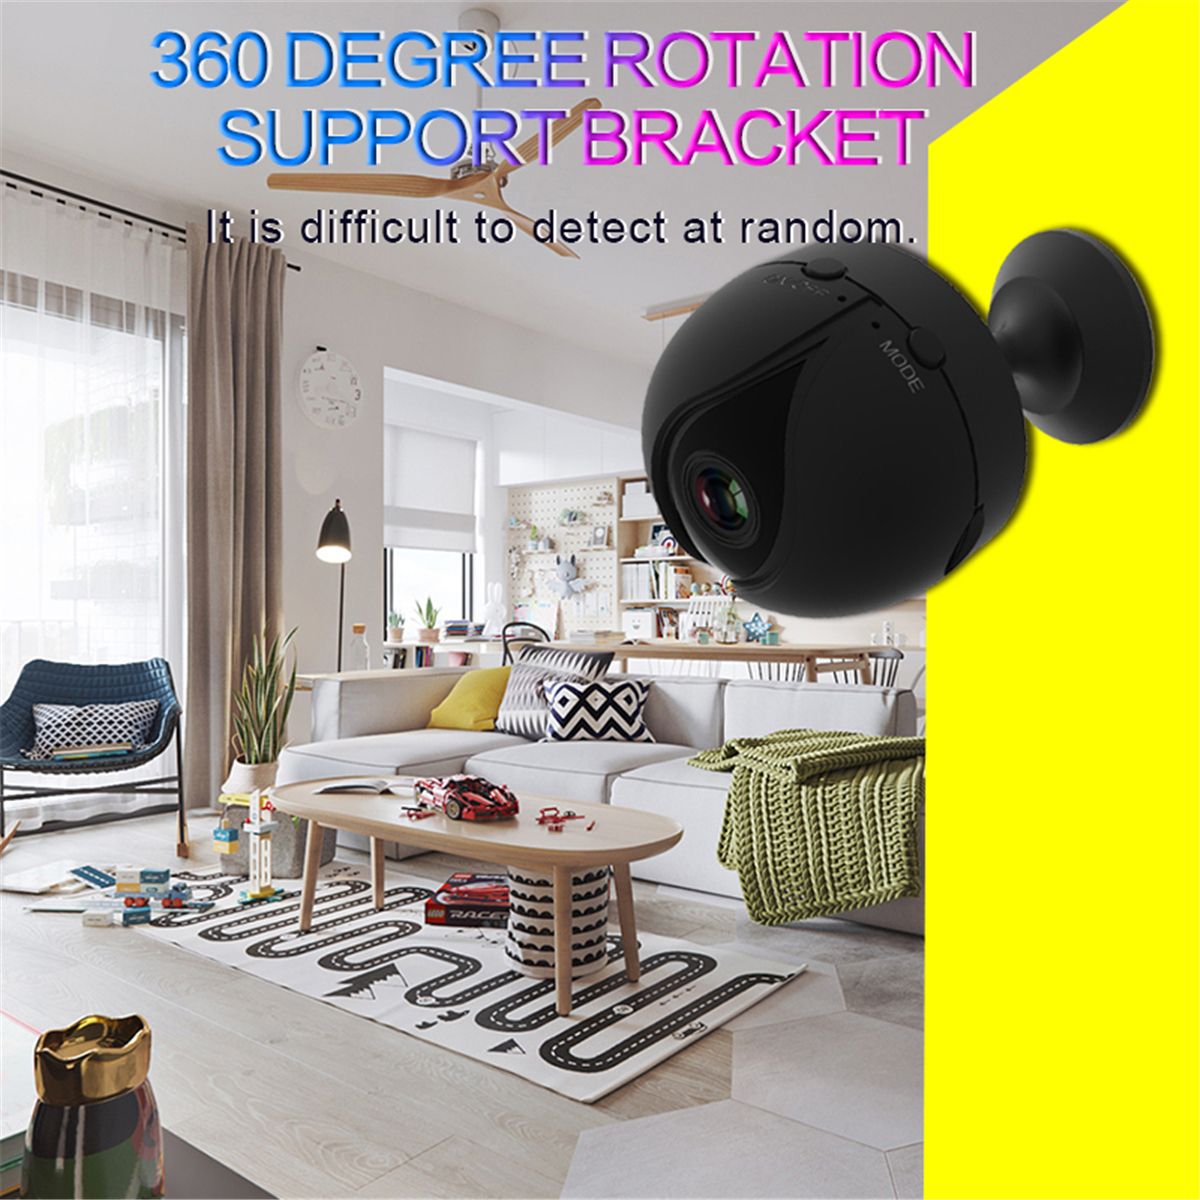 HD-1080P-Mini-WIFI-IP-Camera-Night-Vision-Video-Recorder-160deg-Panoramic-Built-in-Magnet-1396740